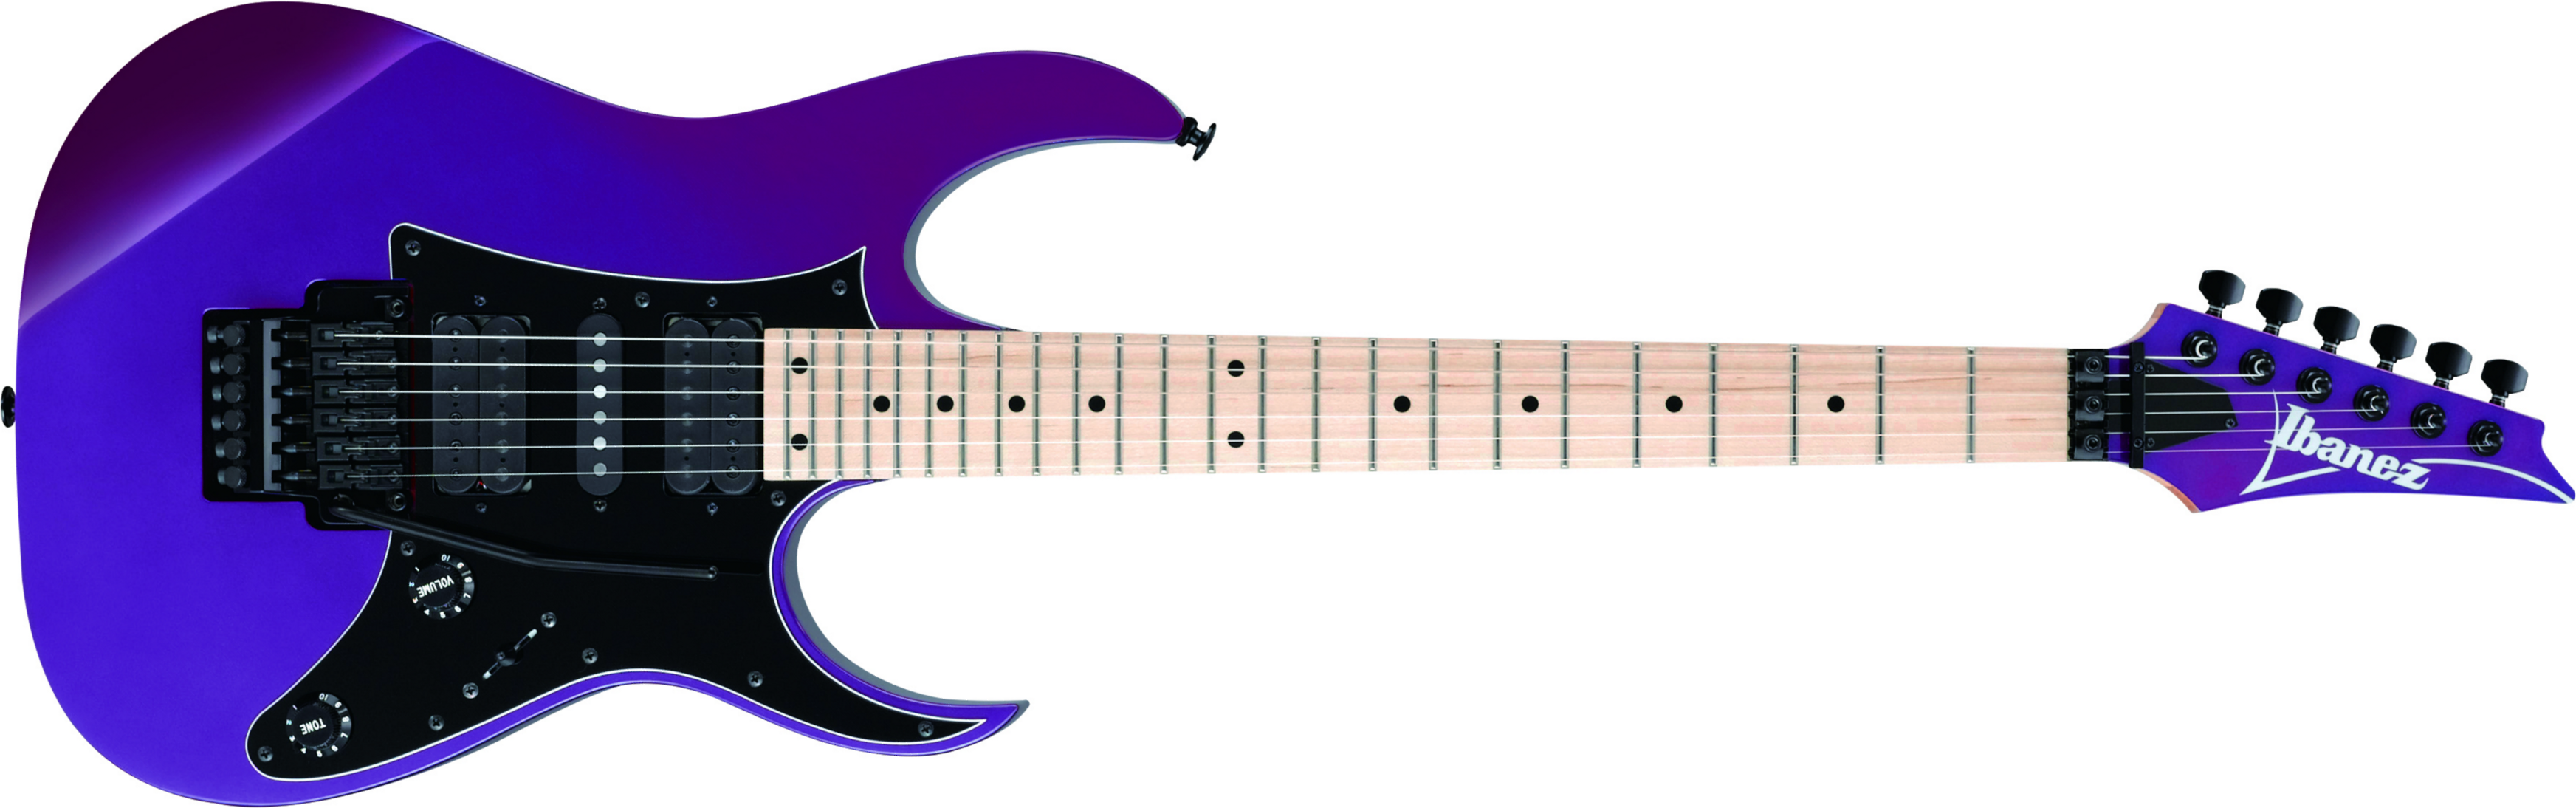 Ibanez Rg550 Pn Genesis Japon Hsh Fr Mn - Purple Neon - Str shape electric guitar - Main picture